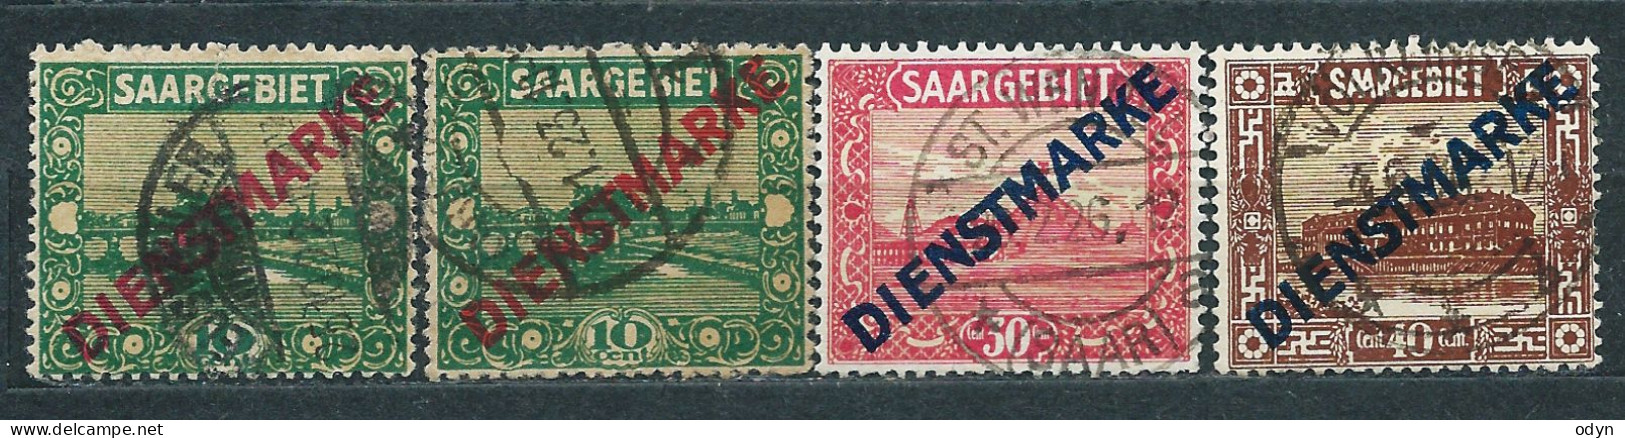 Saargebiet Dienstmarken 1922, Complete Set MiNr 1-11 - Unused MH * + 4 Stamps Used - Dienstzegels